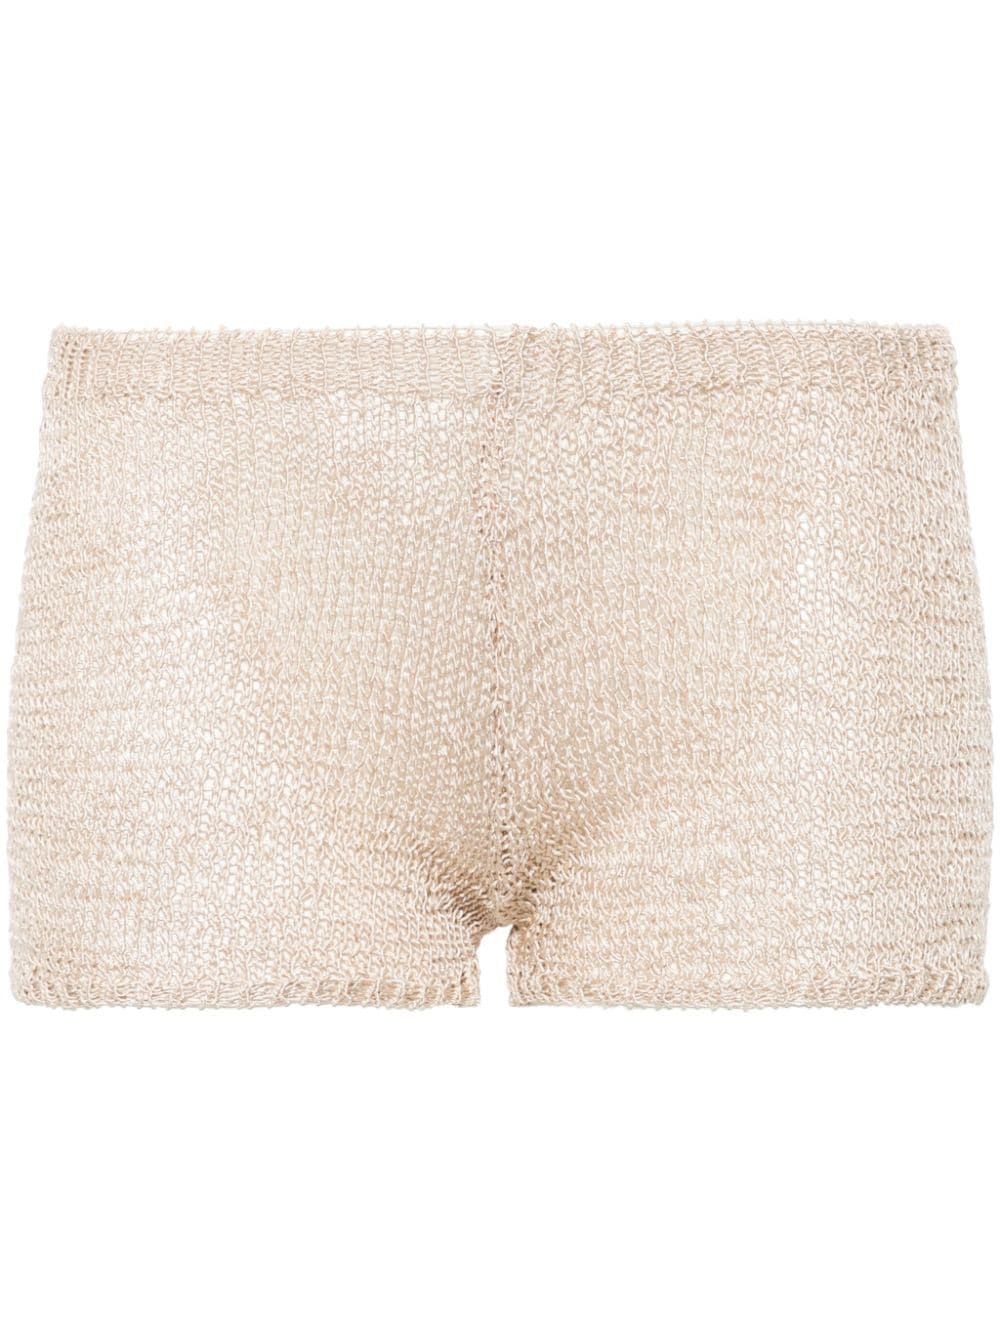 Paloma Wool Gestrickte Trefle Shorts - Nude von Paloma Wool